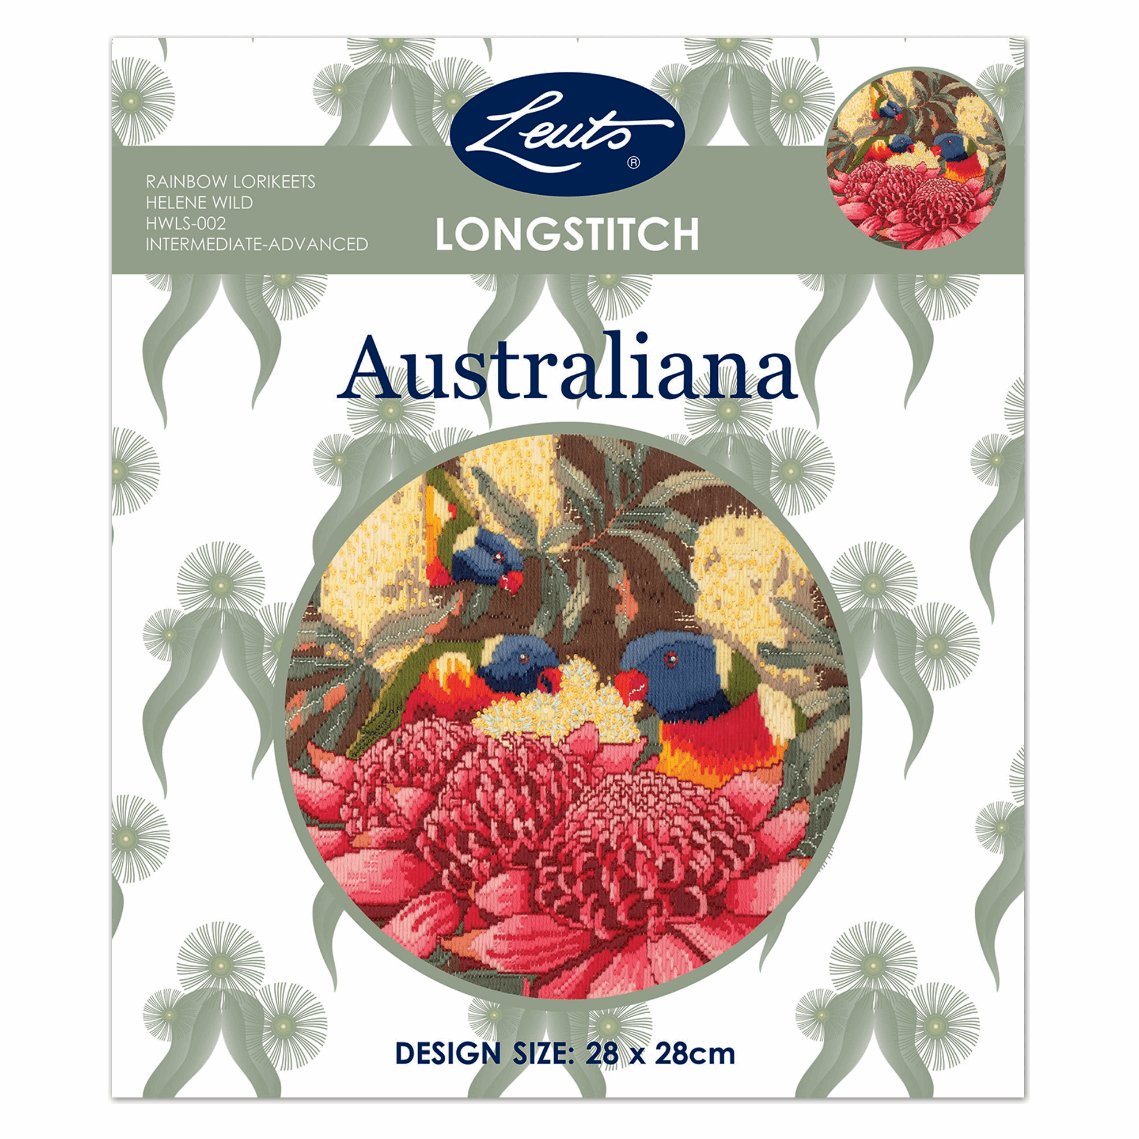 Australiana Longstitch Kits by Helene Wild - 5 styles